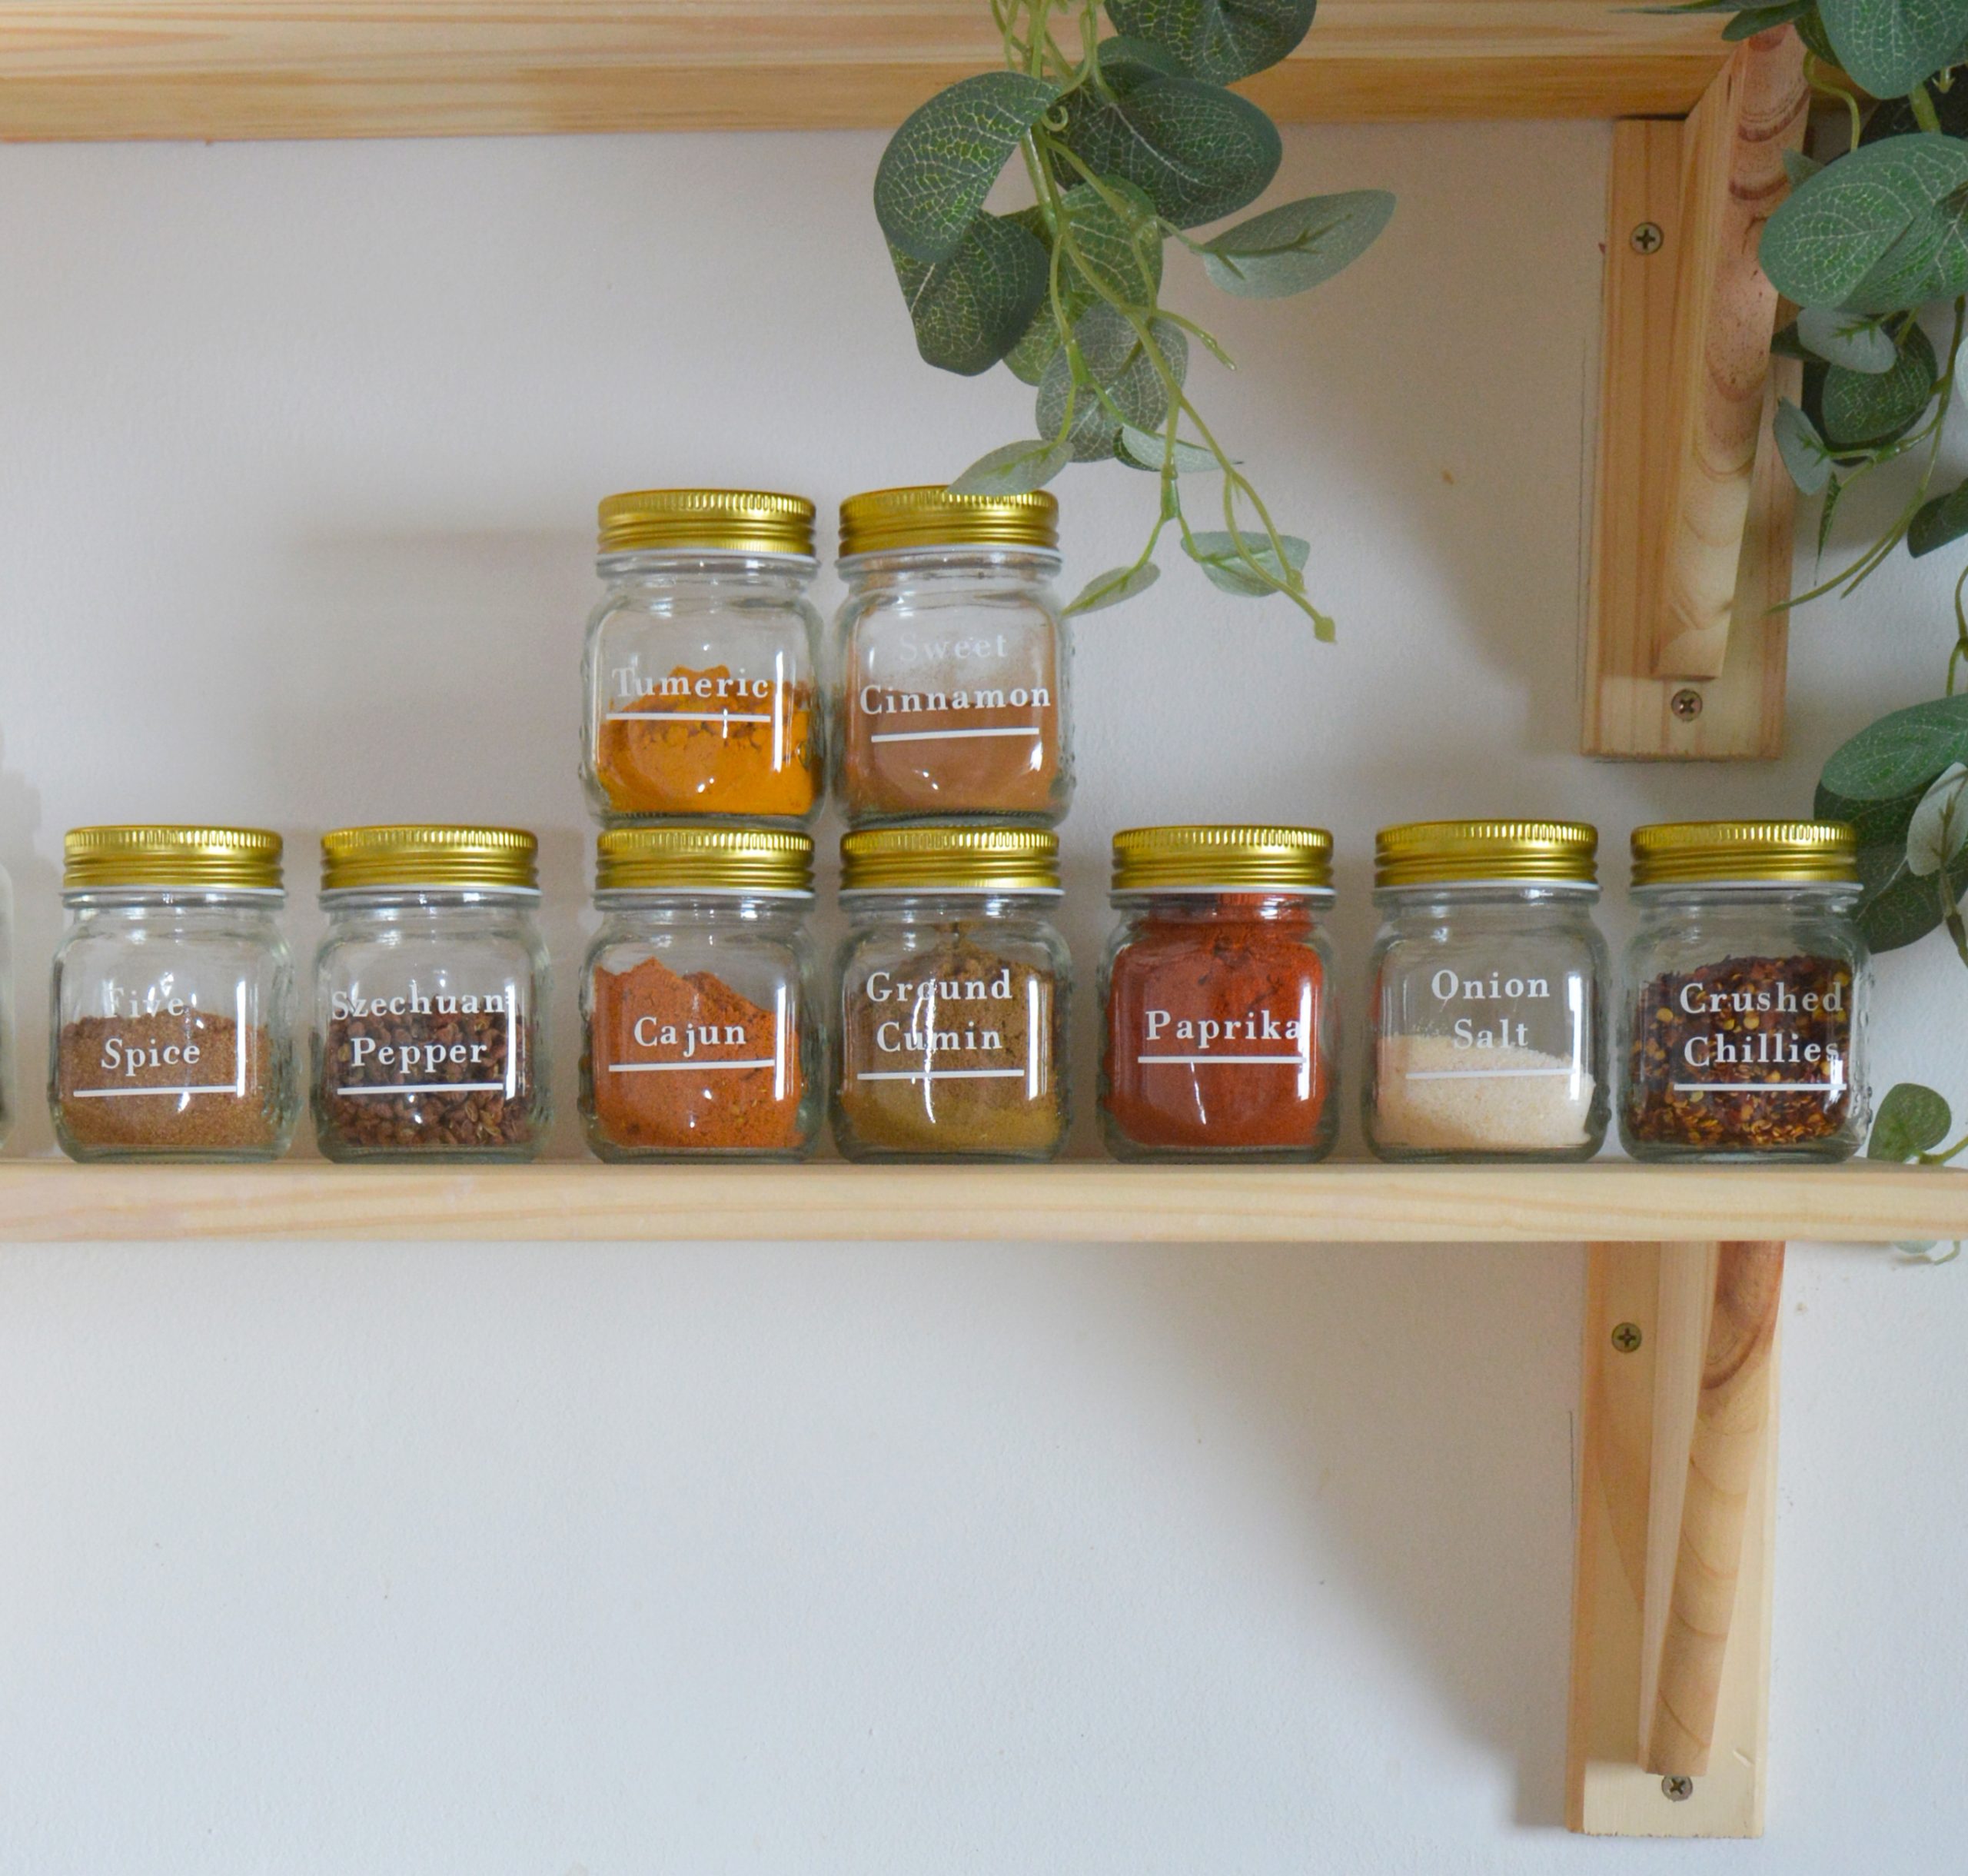 Handmade Labels for Spice Jars